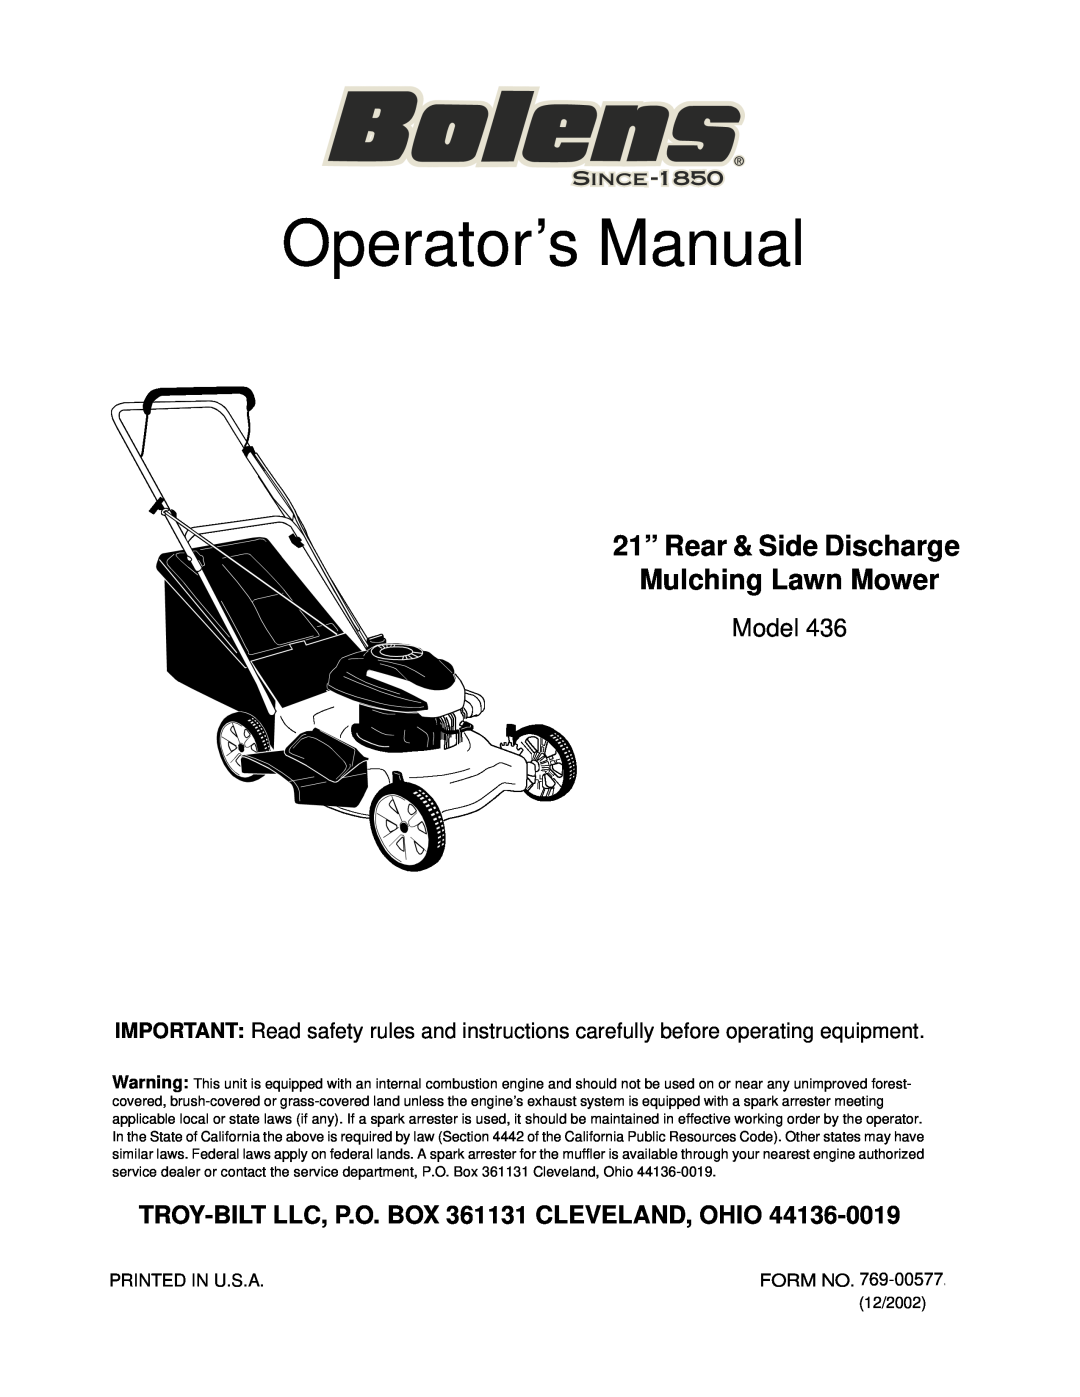 Bolens 436 manual Operator’s Manual, 21” Rear & Side Discharge Mulching Lawn Mower, Model 